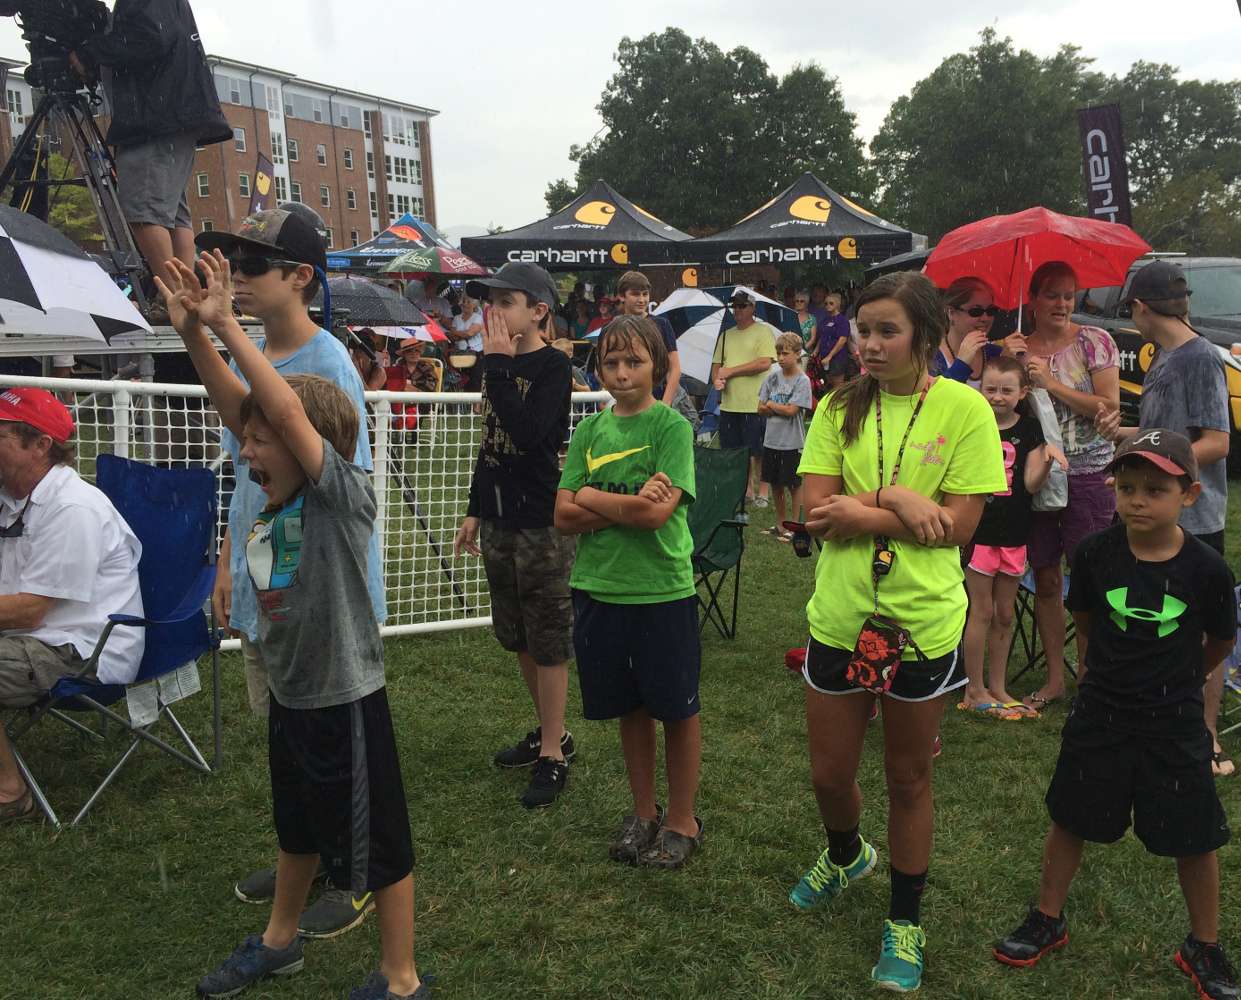 The kids didnât mind the rain, especially when the tournament director was throwing freebies out for the crowd.